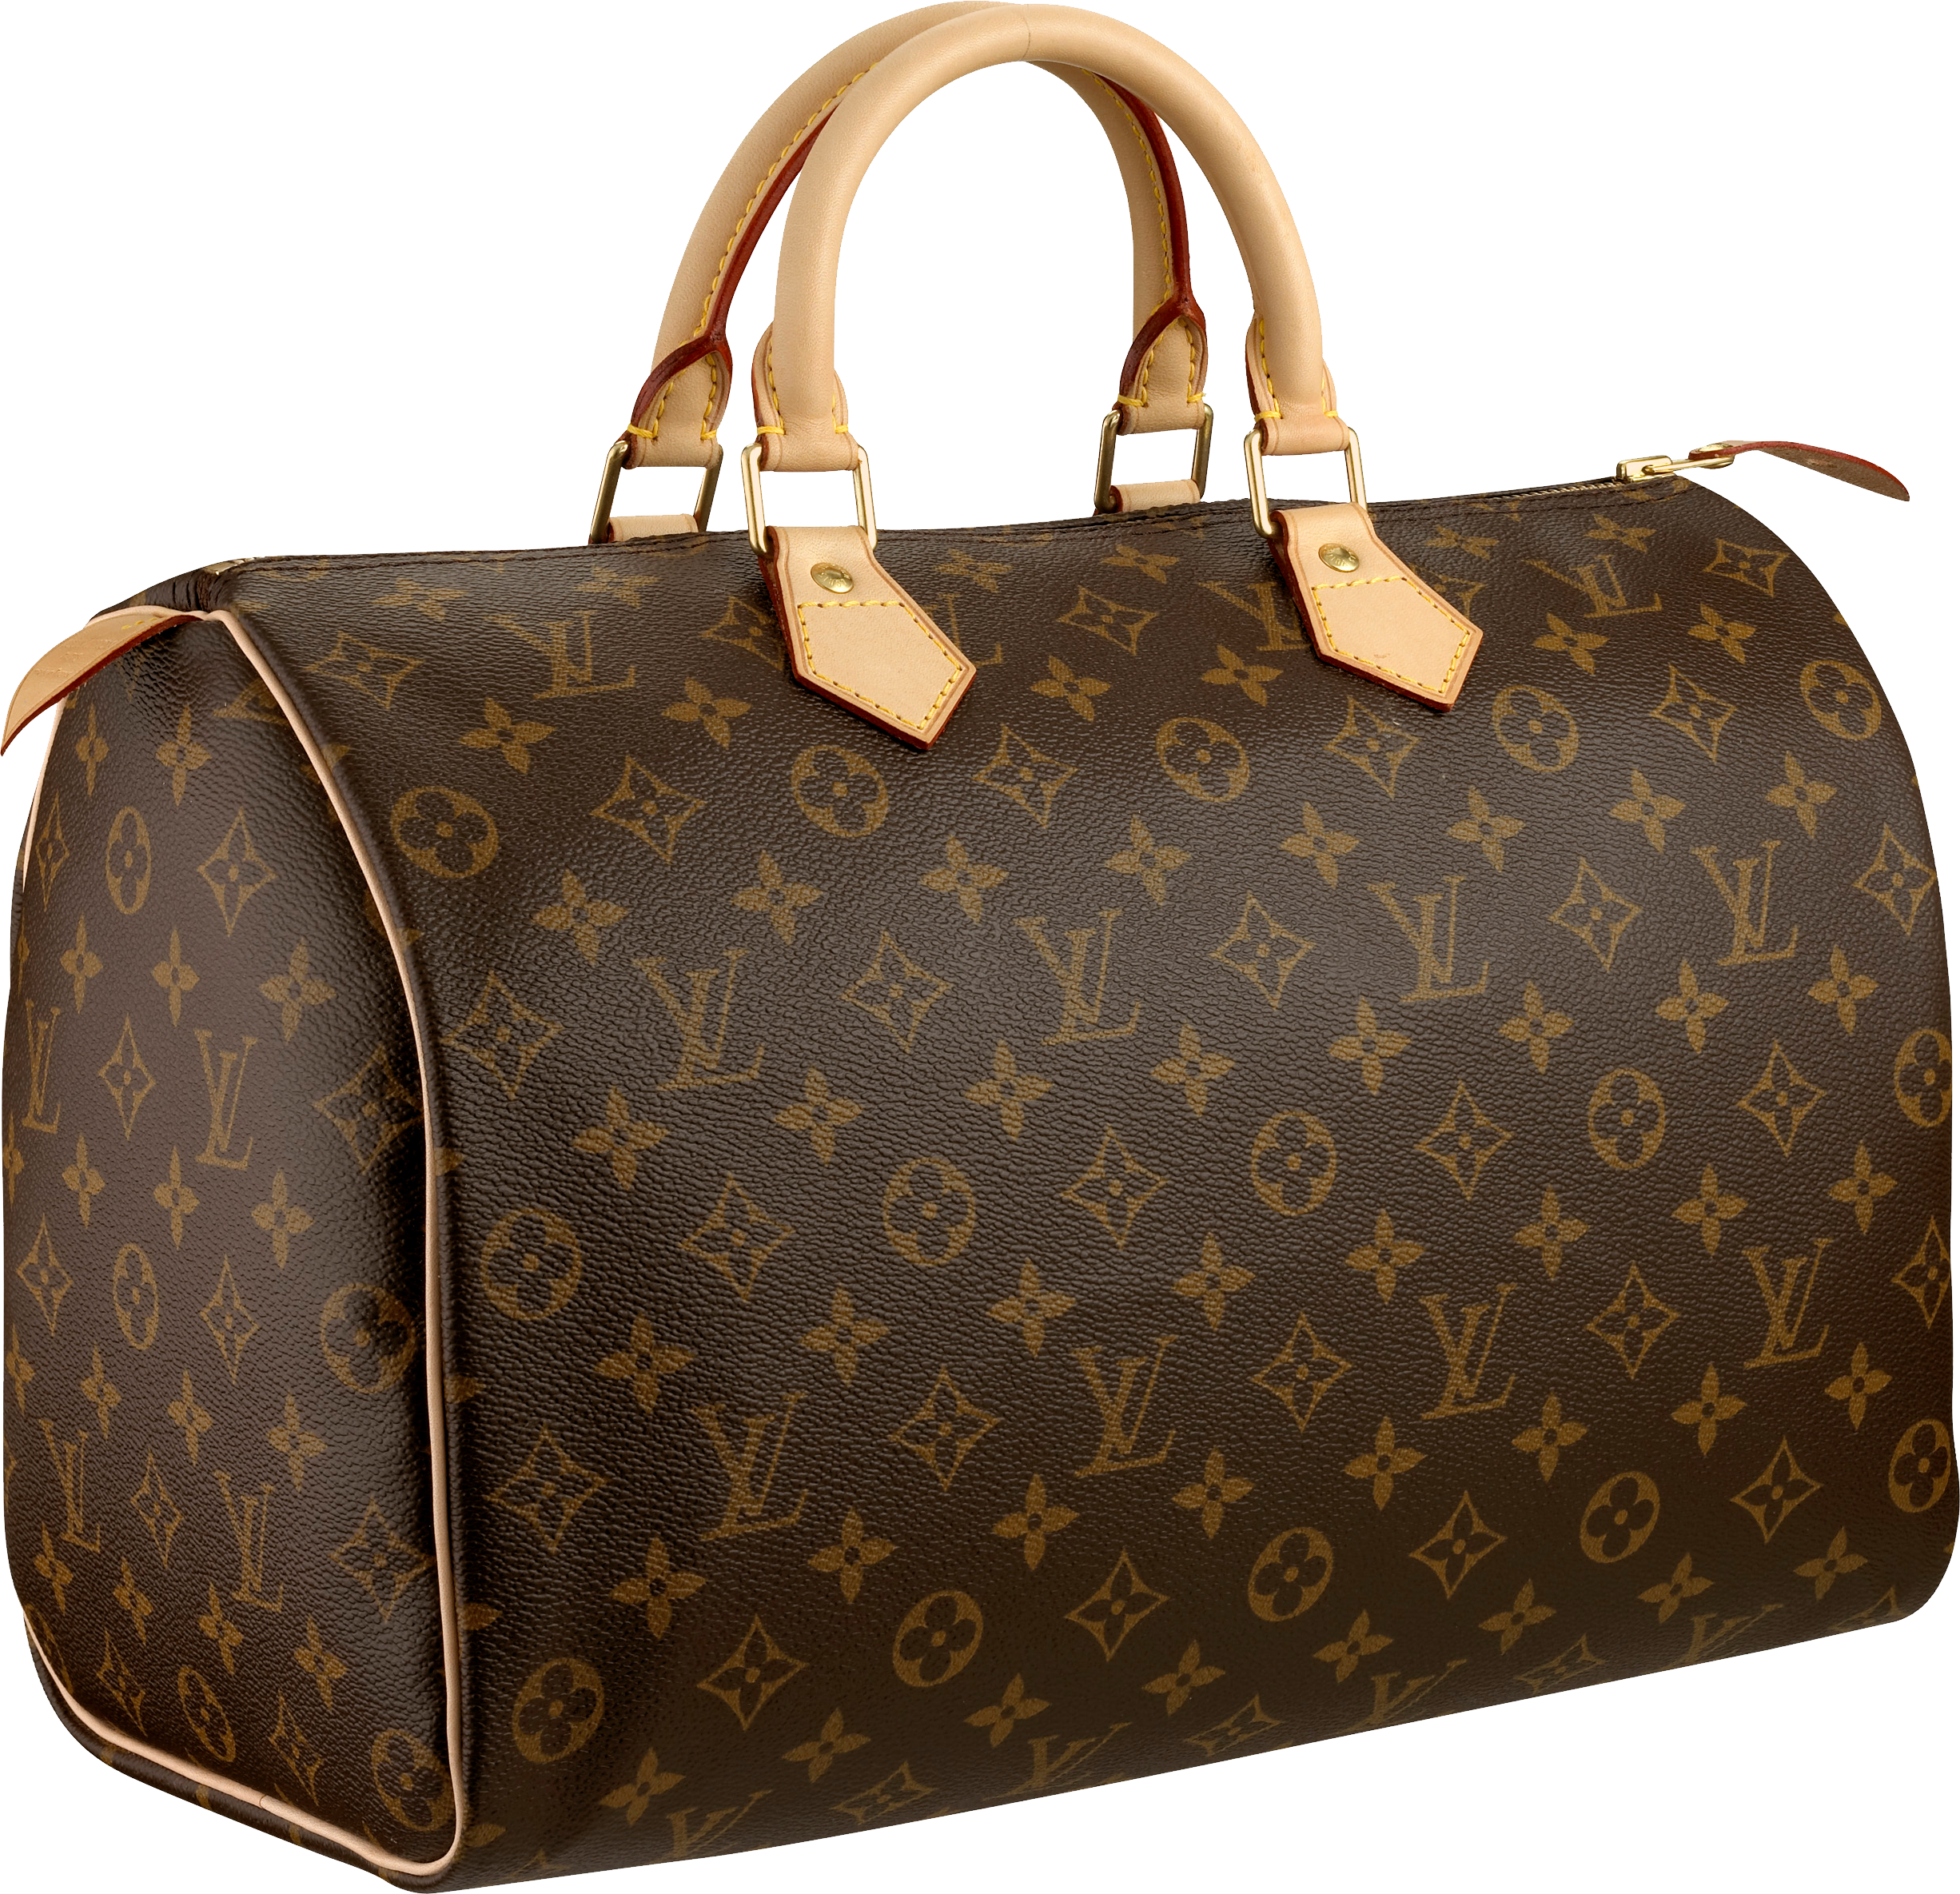 Louis Vuitton Women Bag Png Image - Bag, Transparent background PNG HD thumbnail